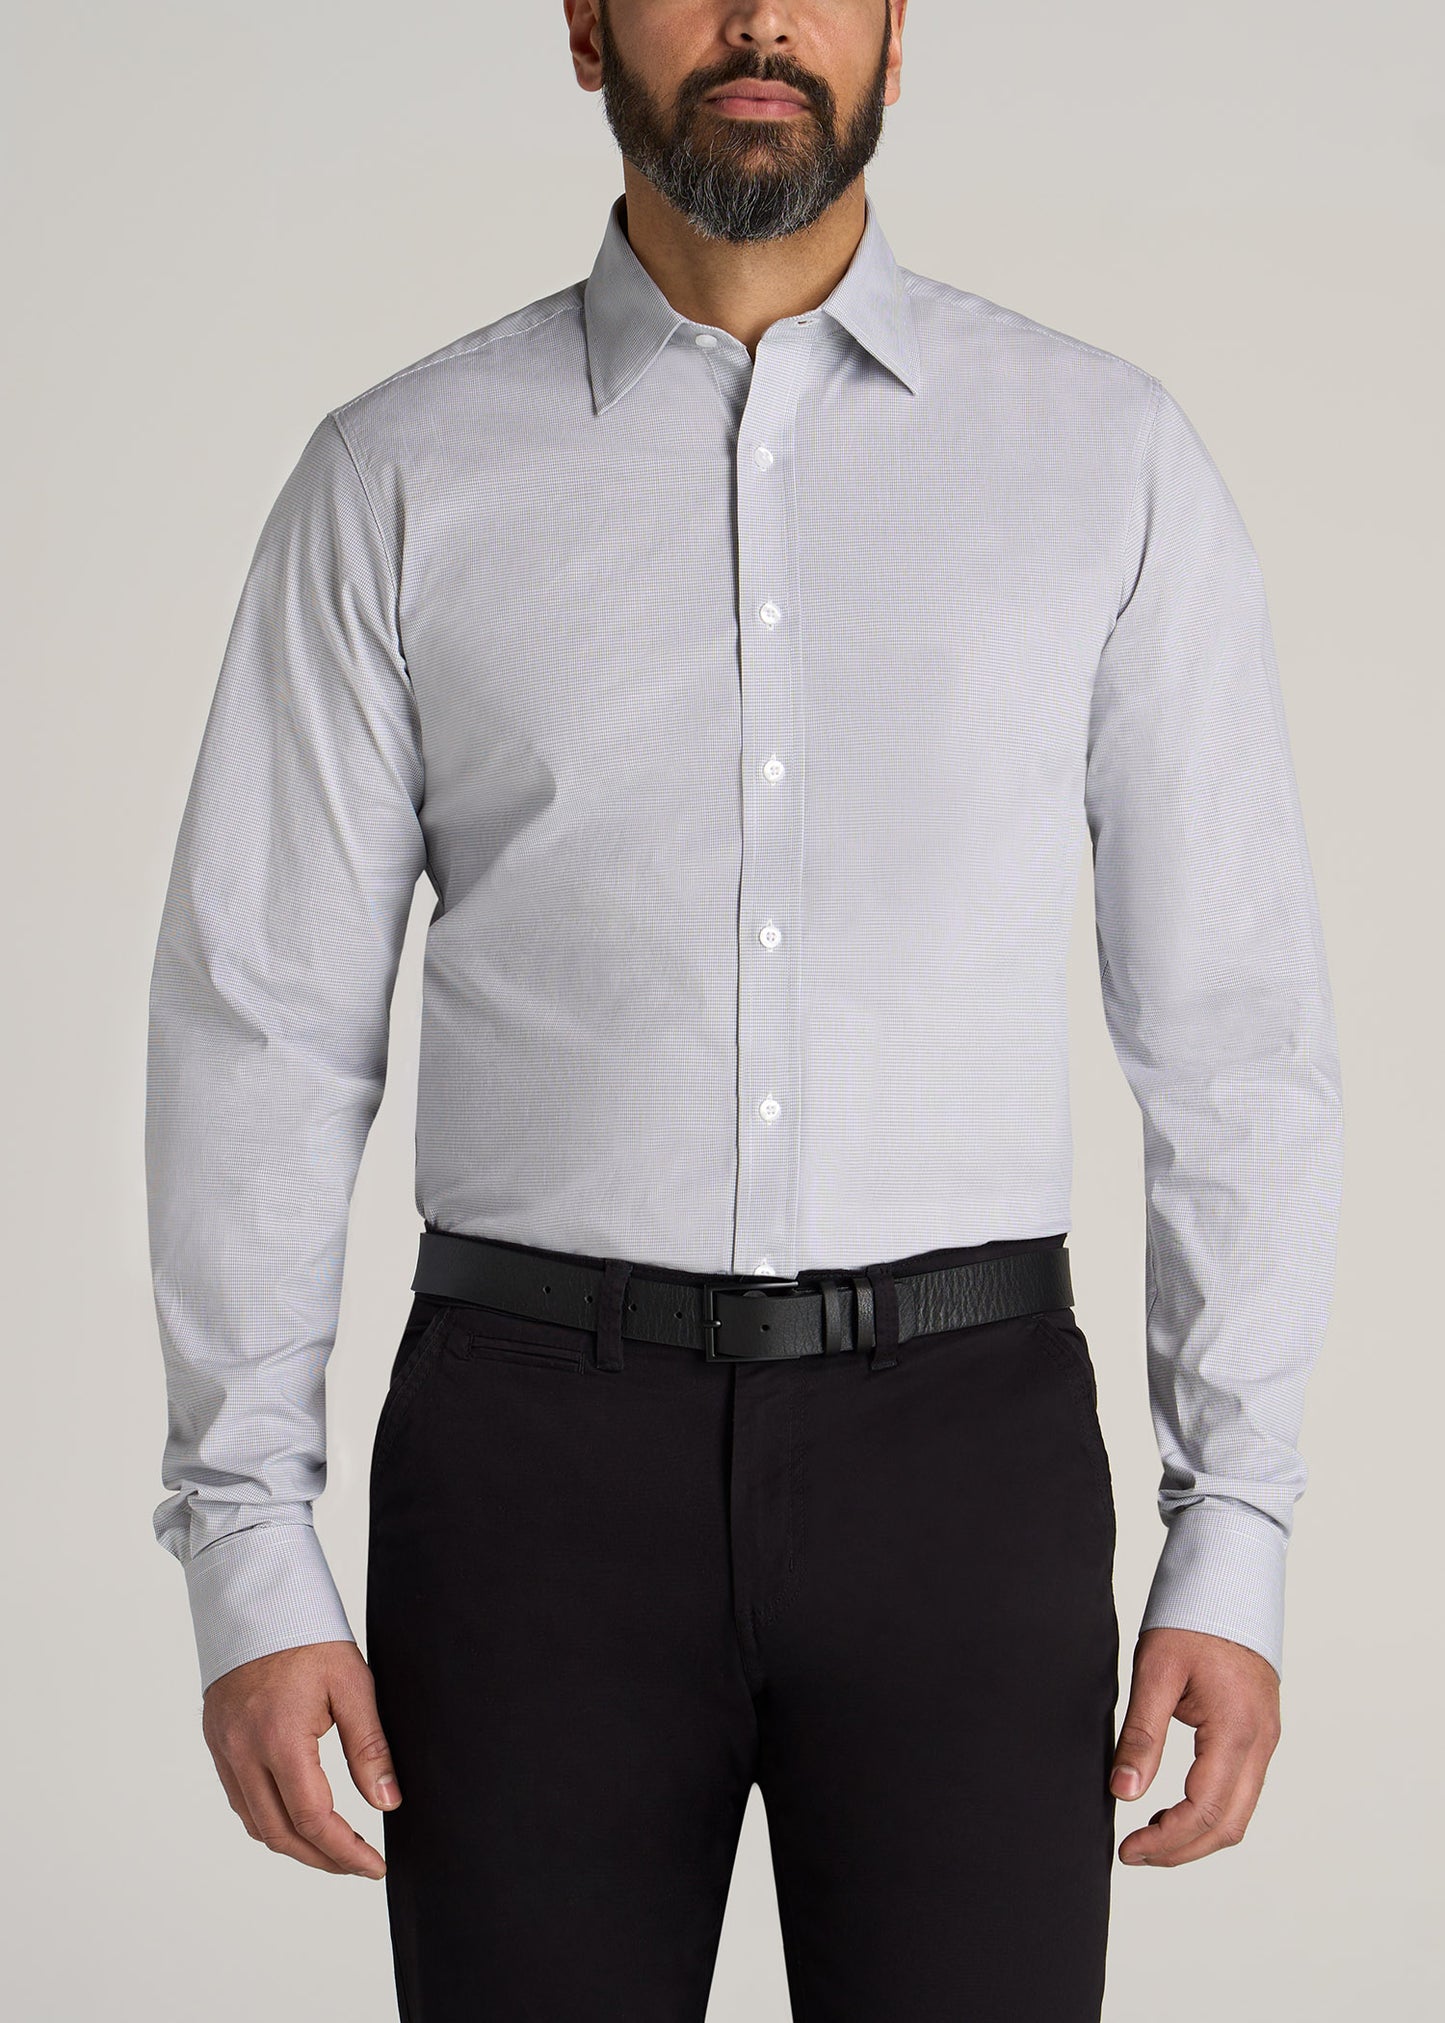 A tall man wearing American Tall's Oskar Button-Up Shirt for Tall Men in Grey & White Gingham.